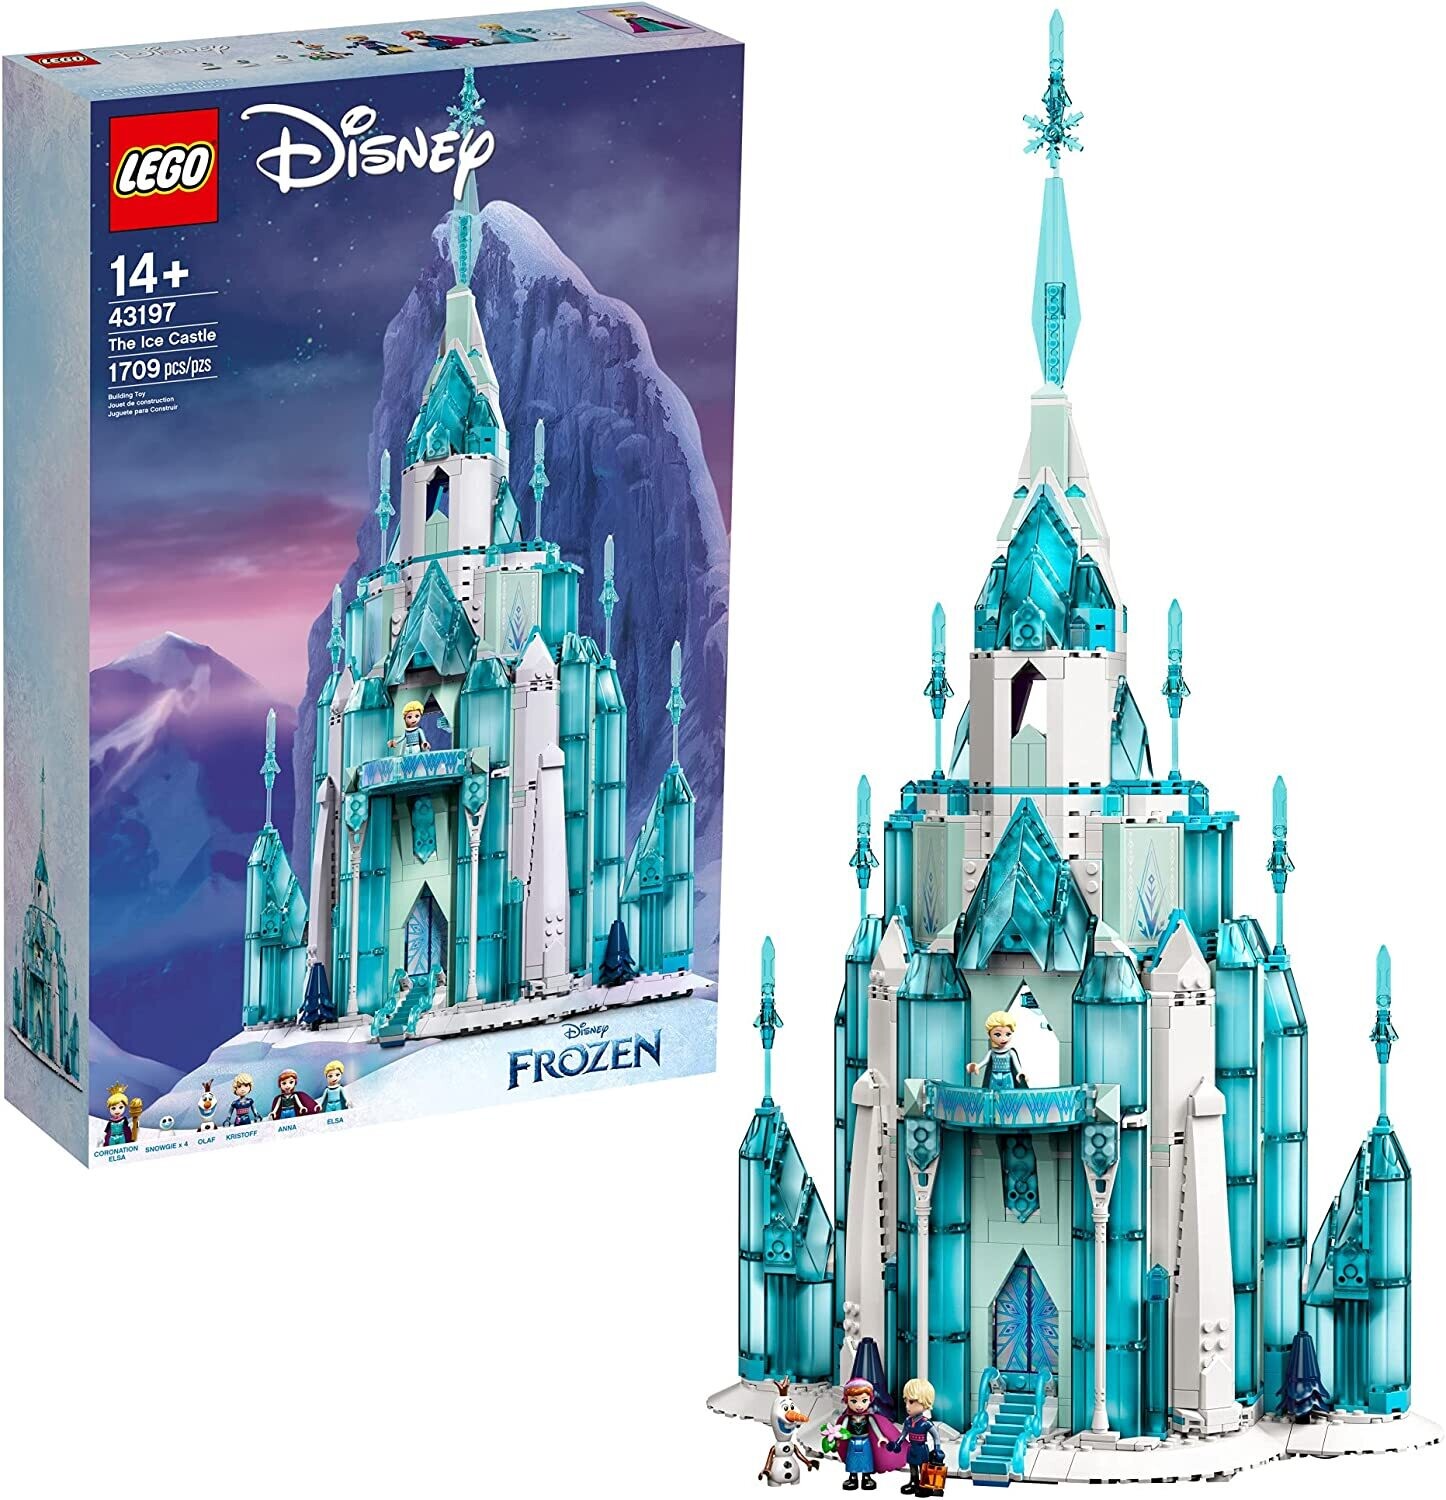 Lego 43197 The Ice Castle